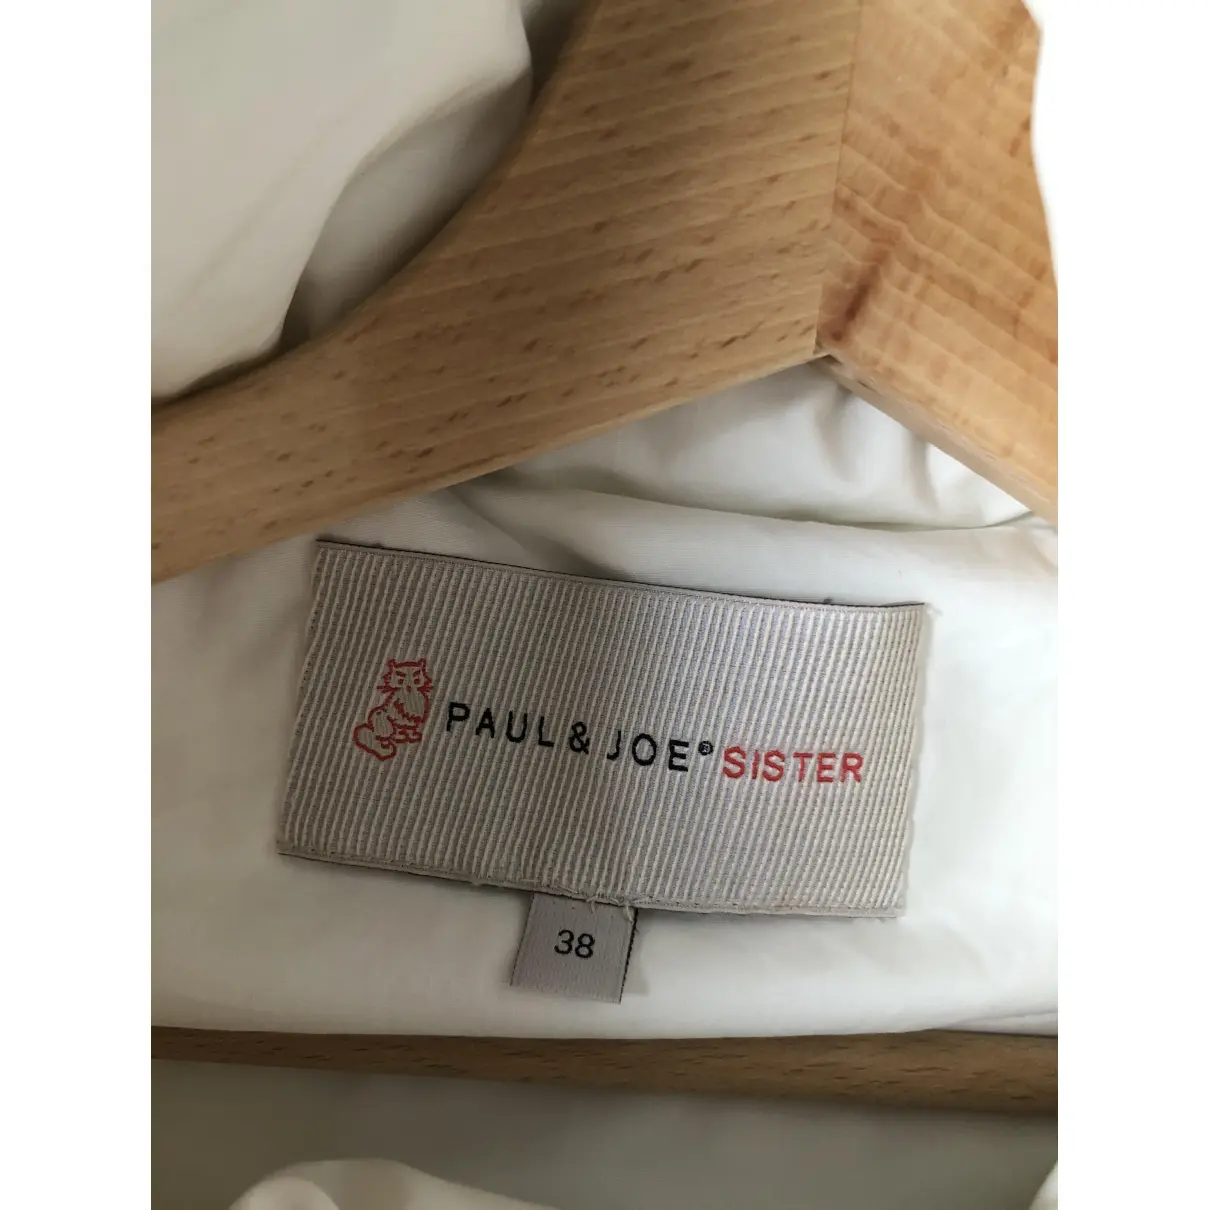 Buy Paul & Joe Sister Puffer online